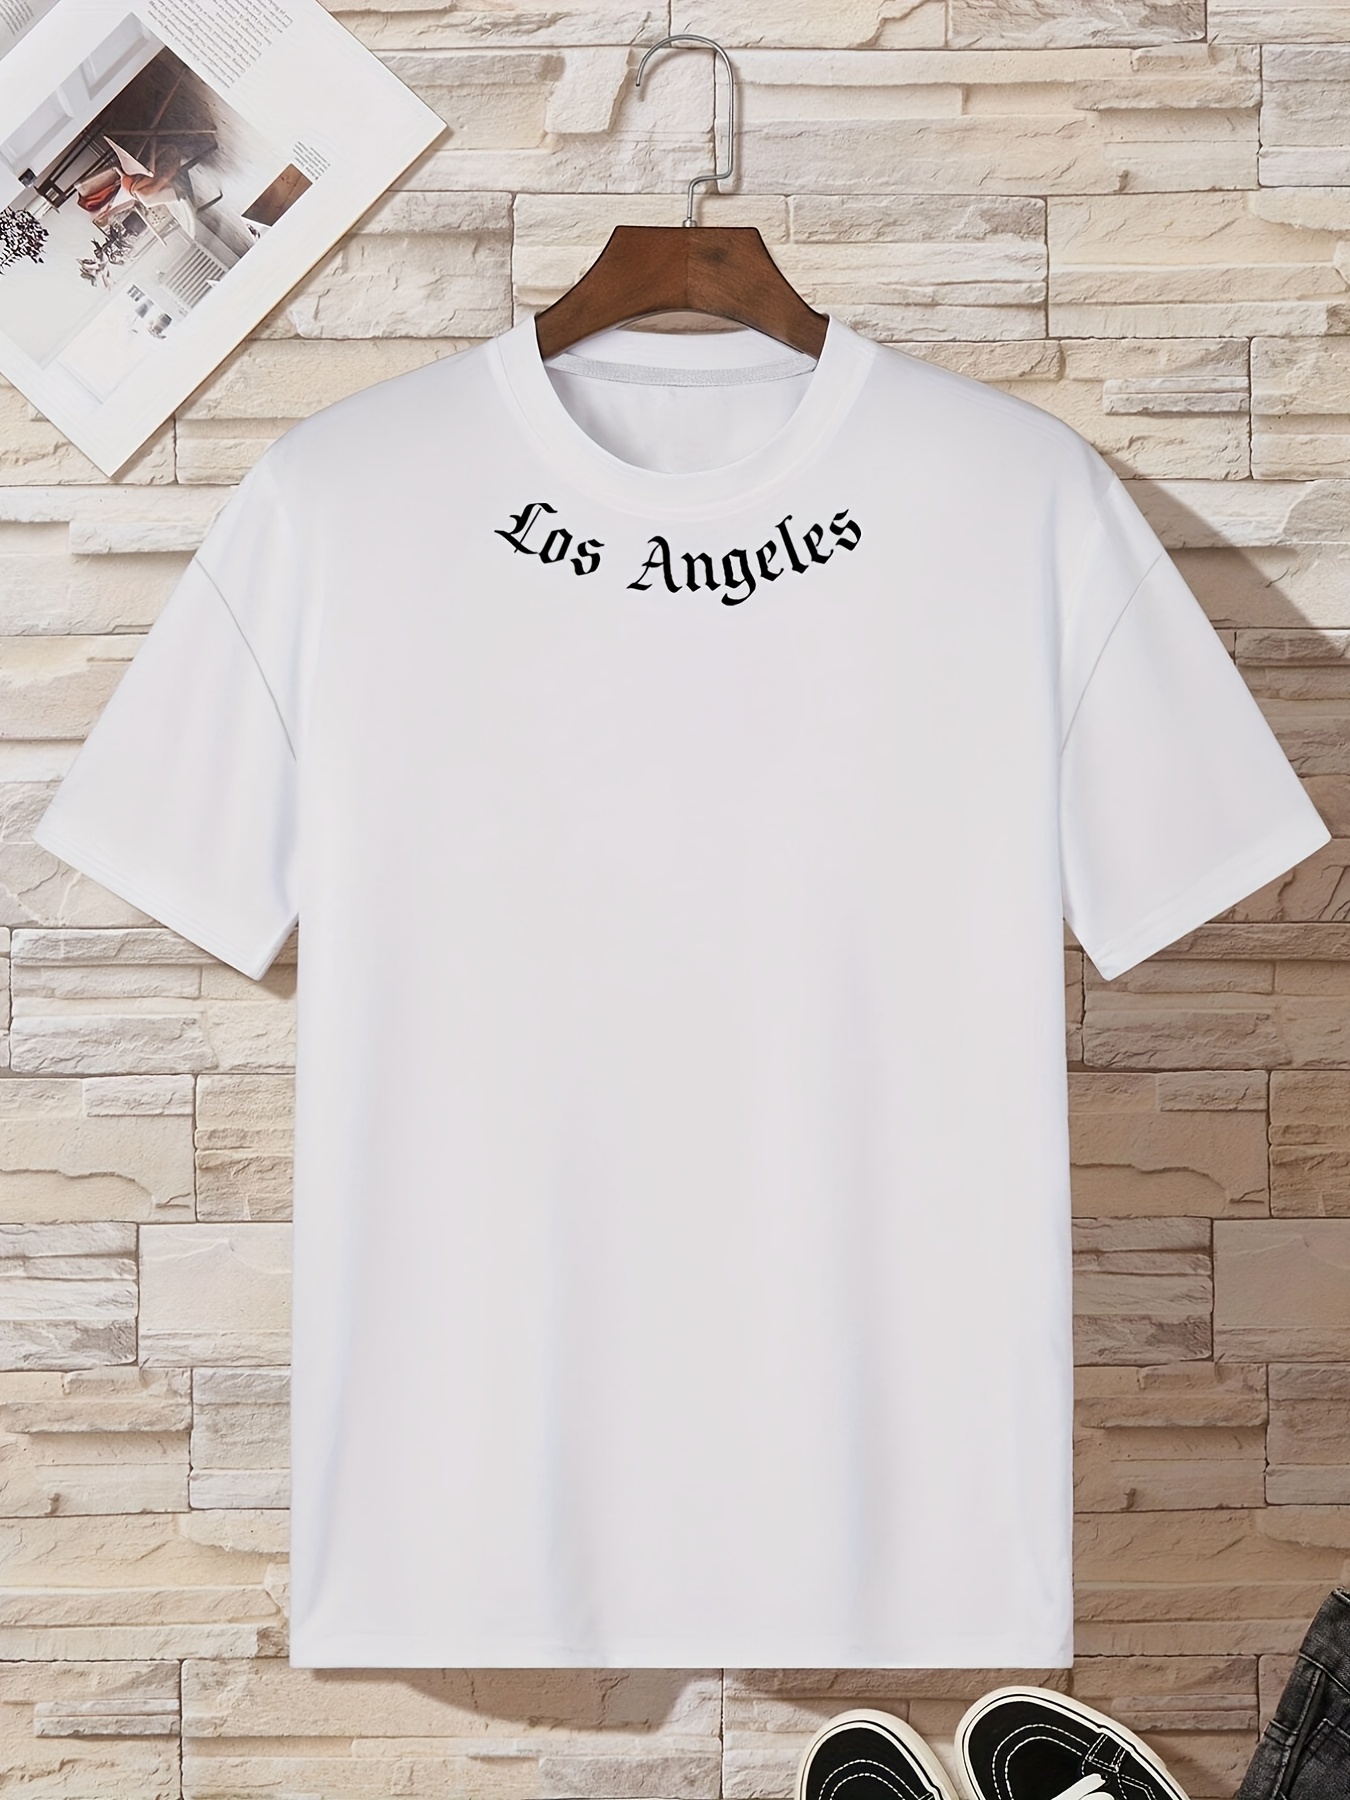 Camiseta L A Los Angeles